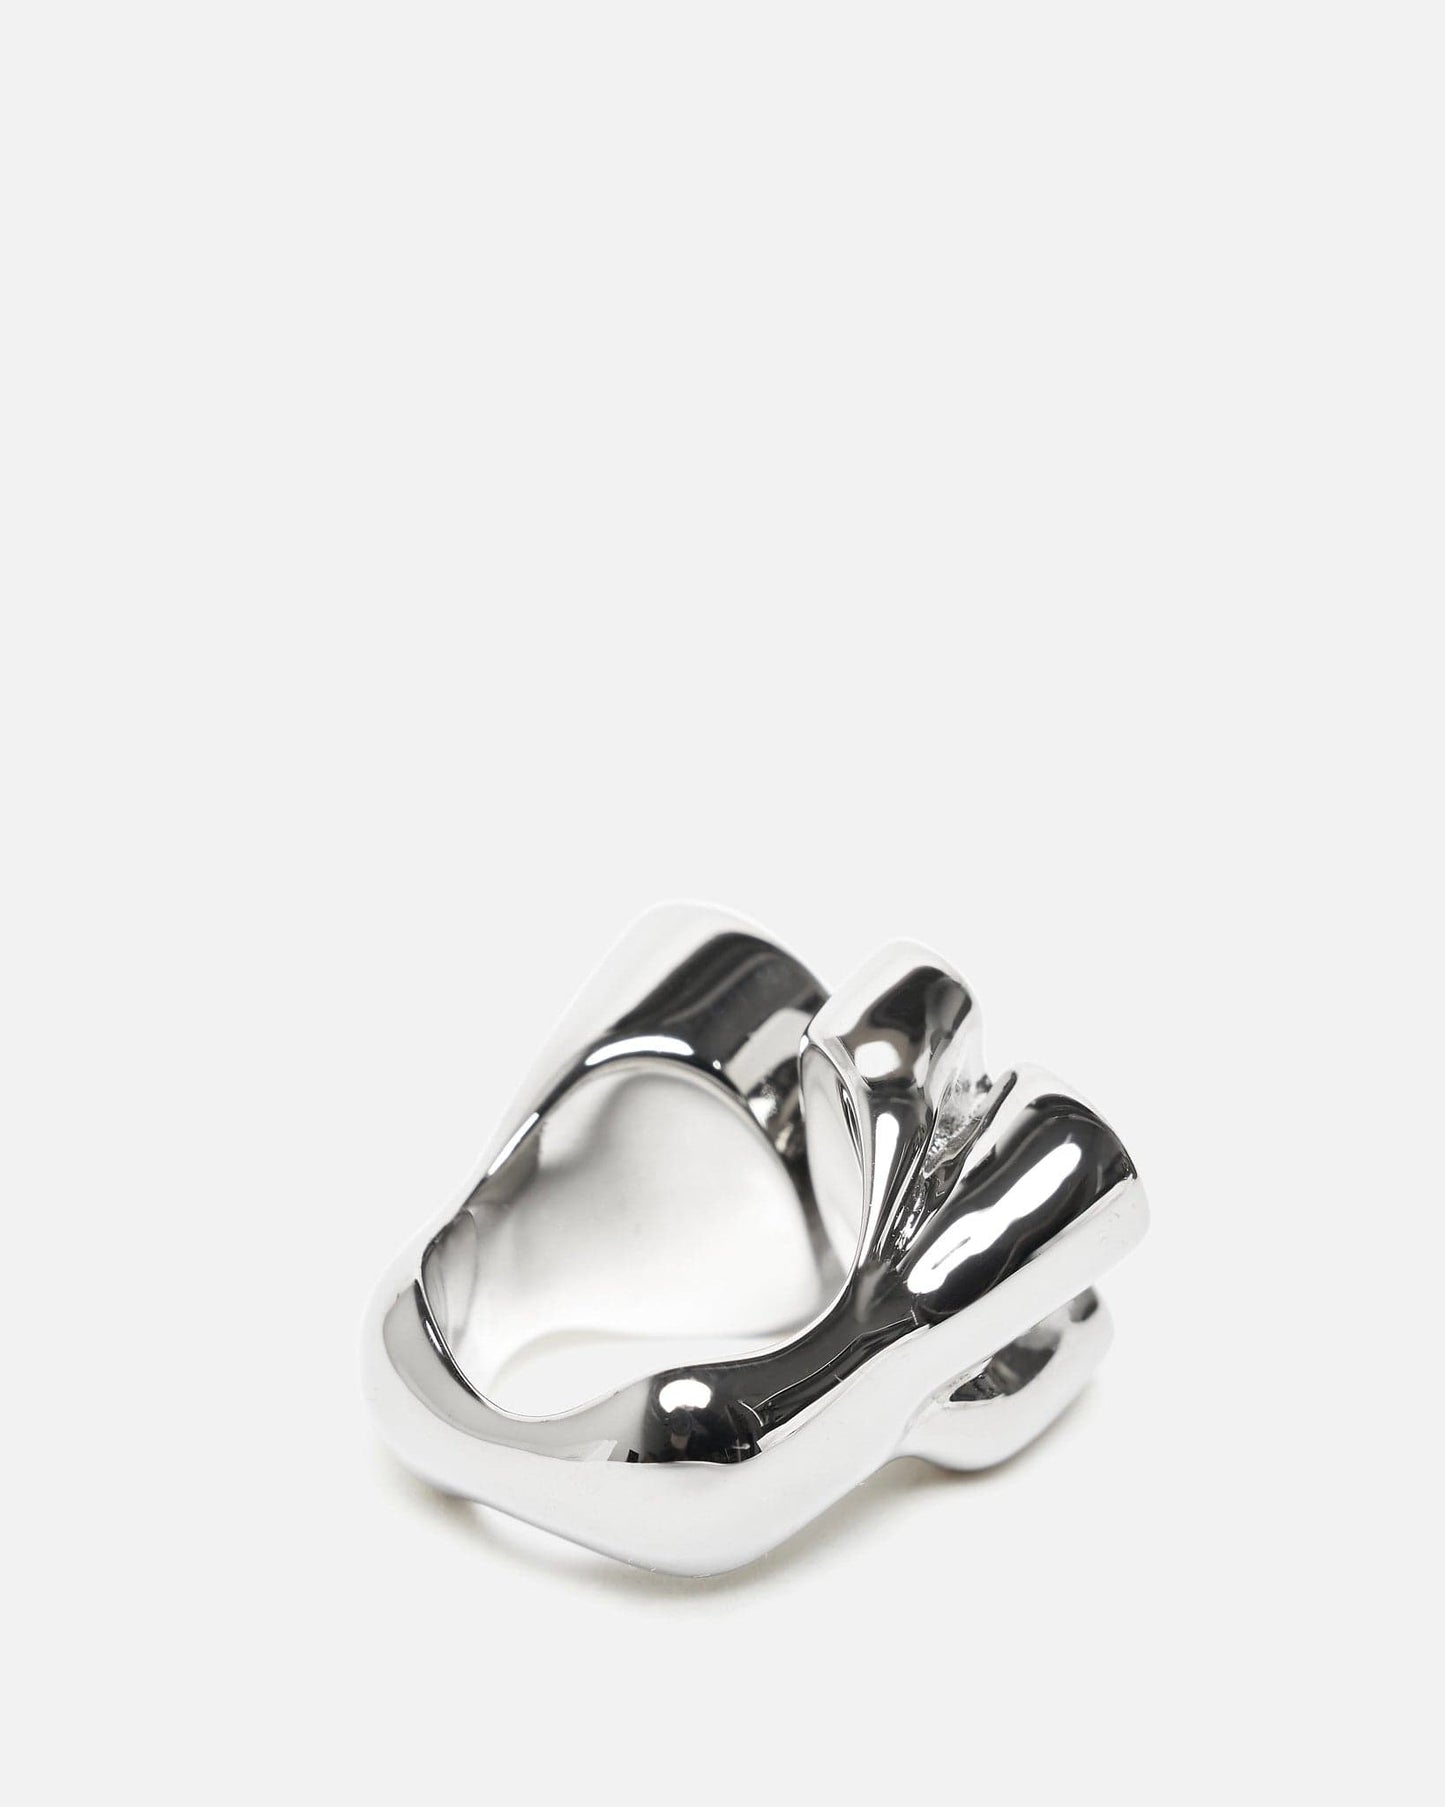 Niccolò Pasqualetti Jewelry Arp Ring in Black